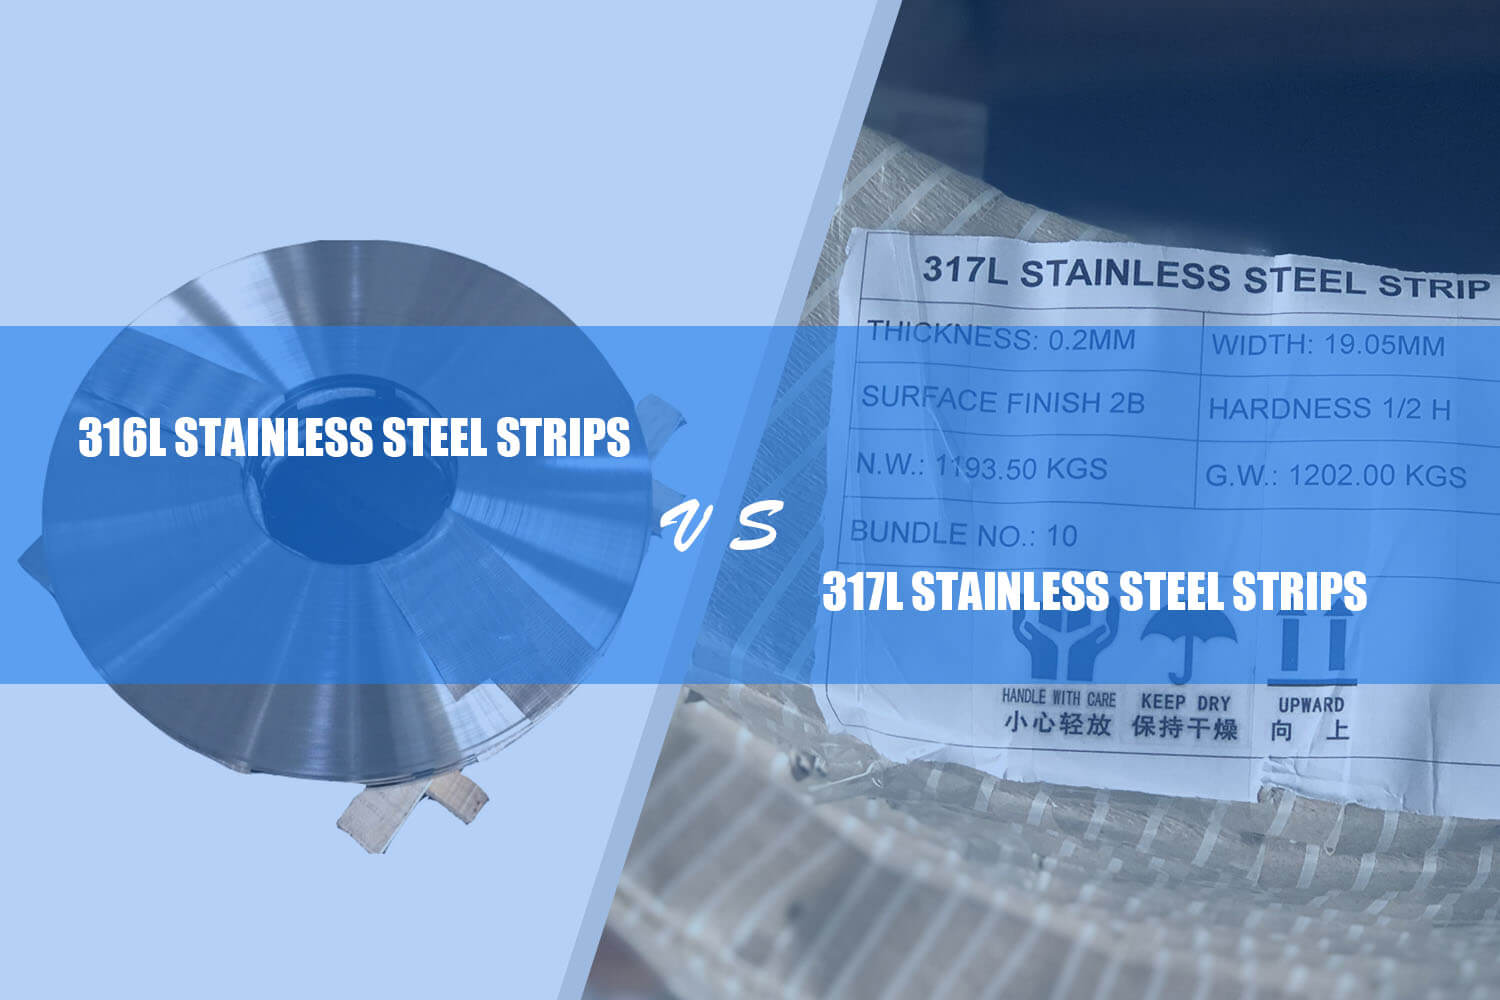 316l stainless steel strip vs 317l stainless steel strip